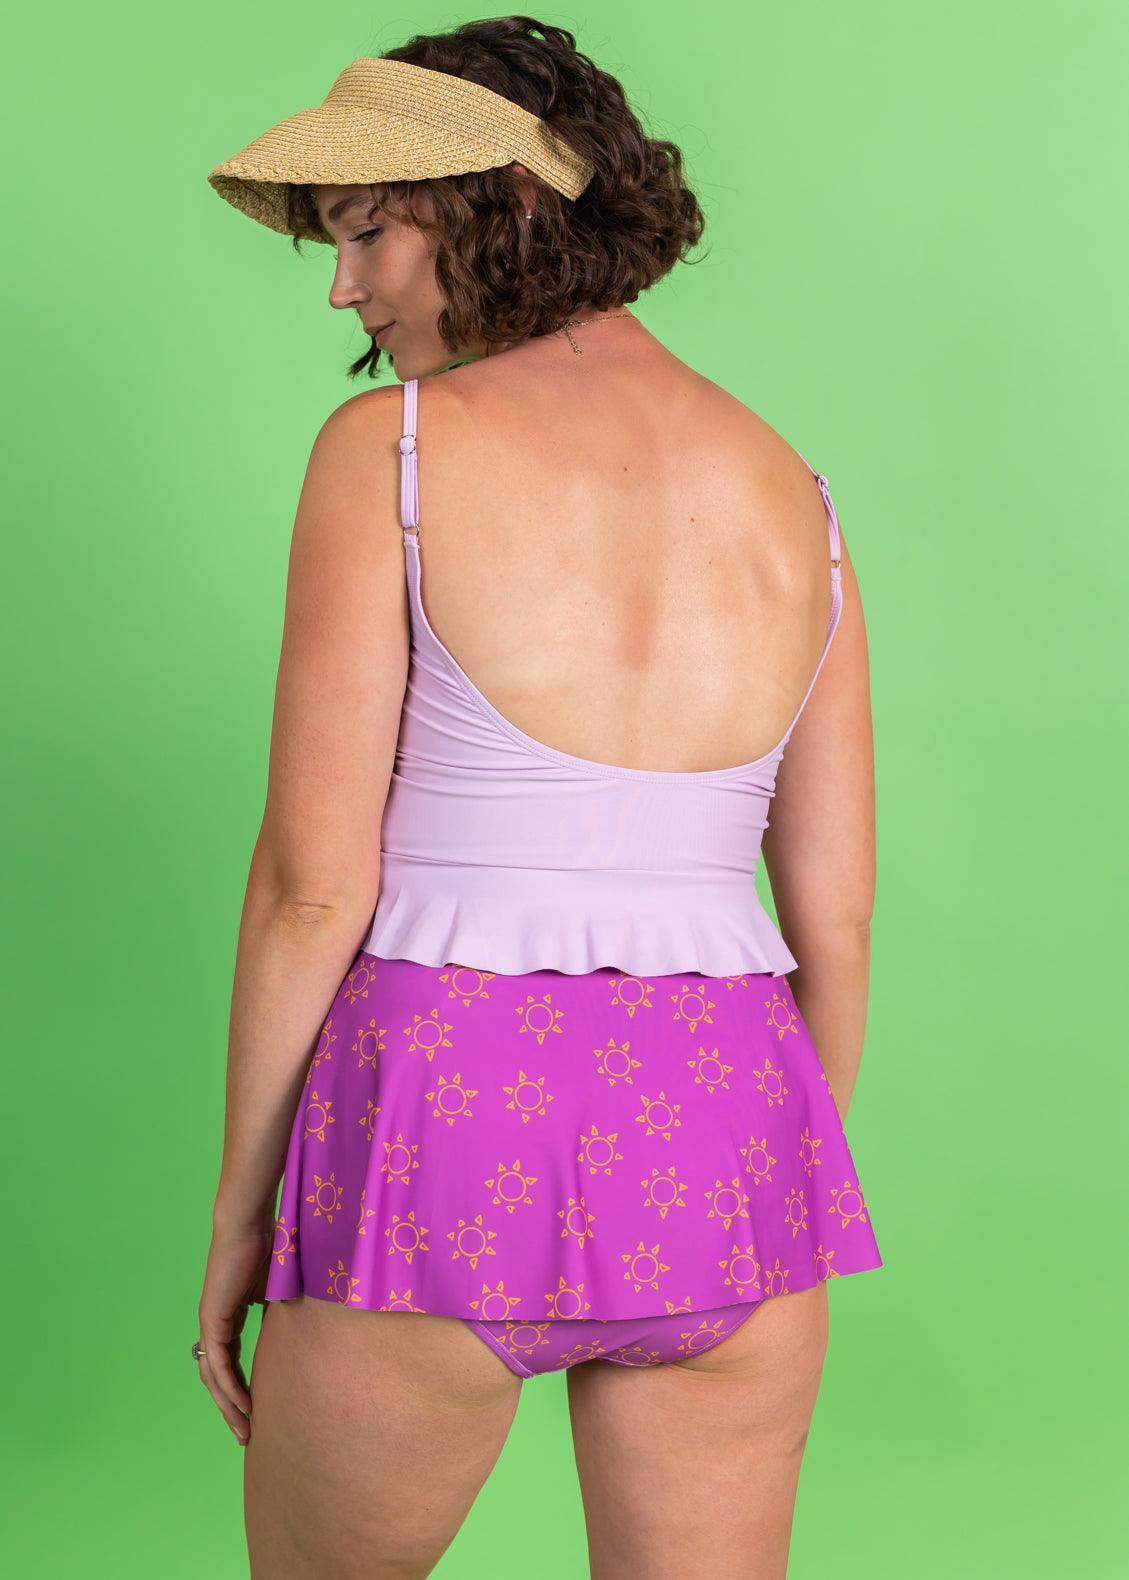 High-Waisted Swimsuit Bottom - Skirt - Suns